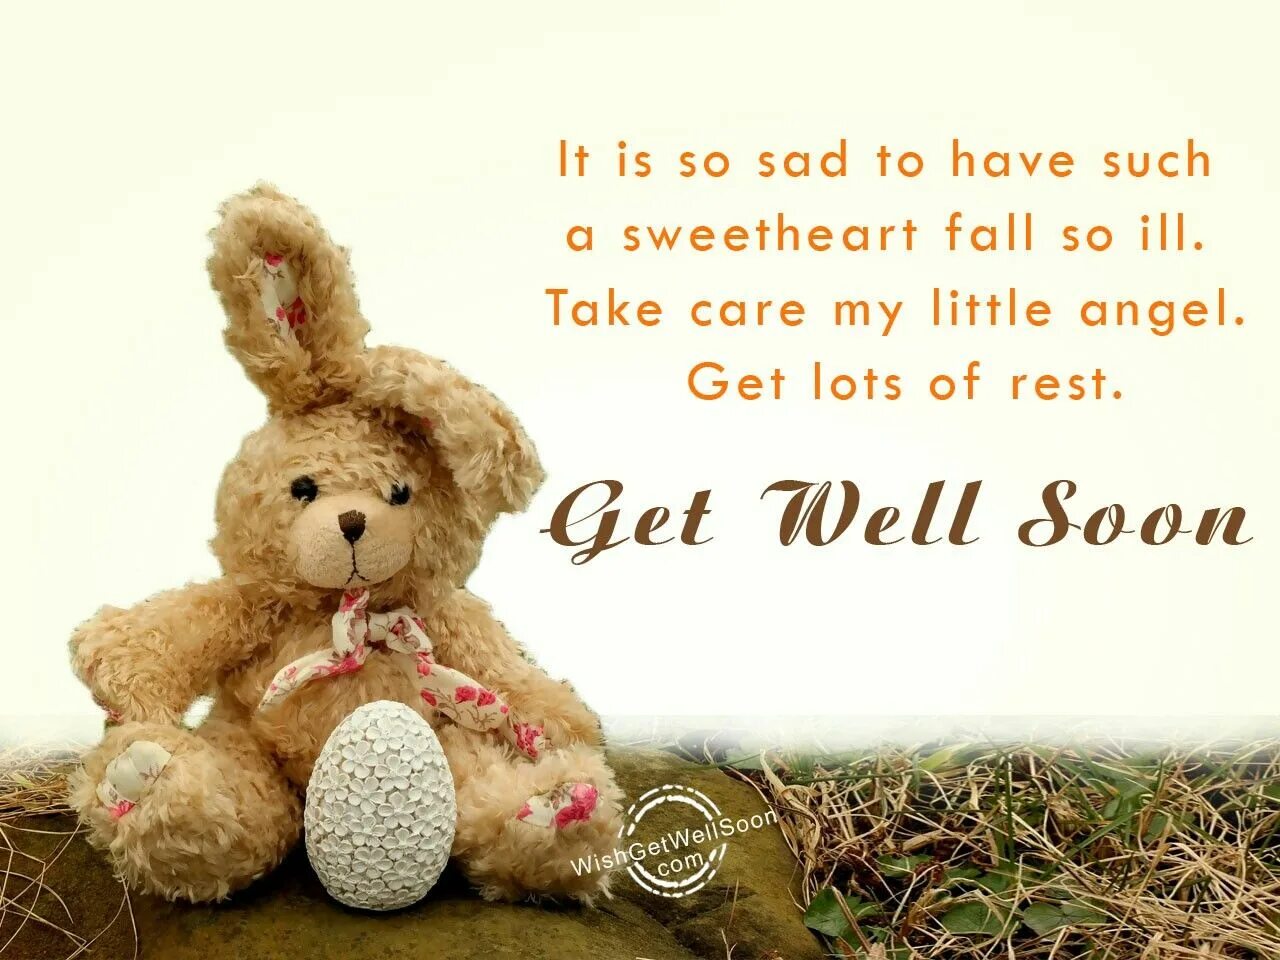 Get better or get well. Открытка get well soon. Get well soon открытка на английском. Get well soon перевод. Get well открытка.